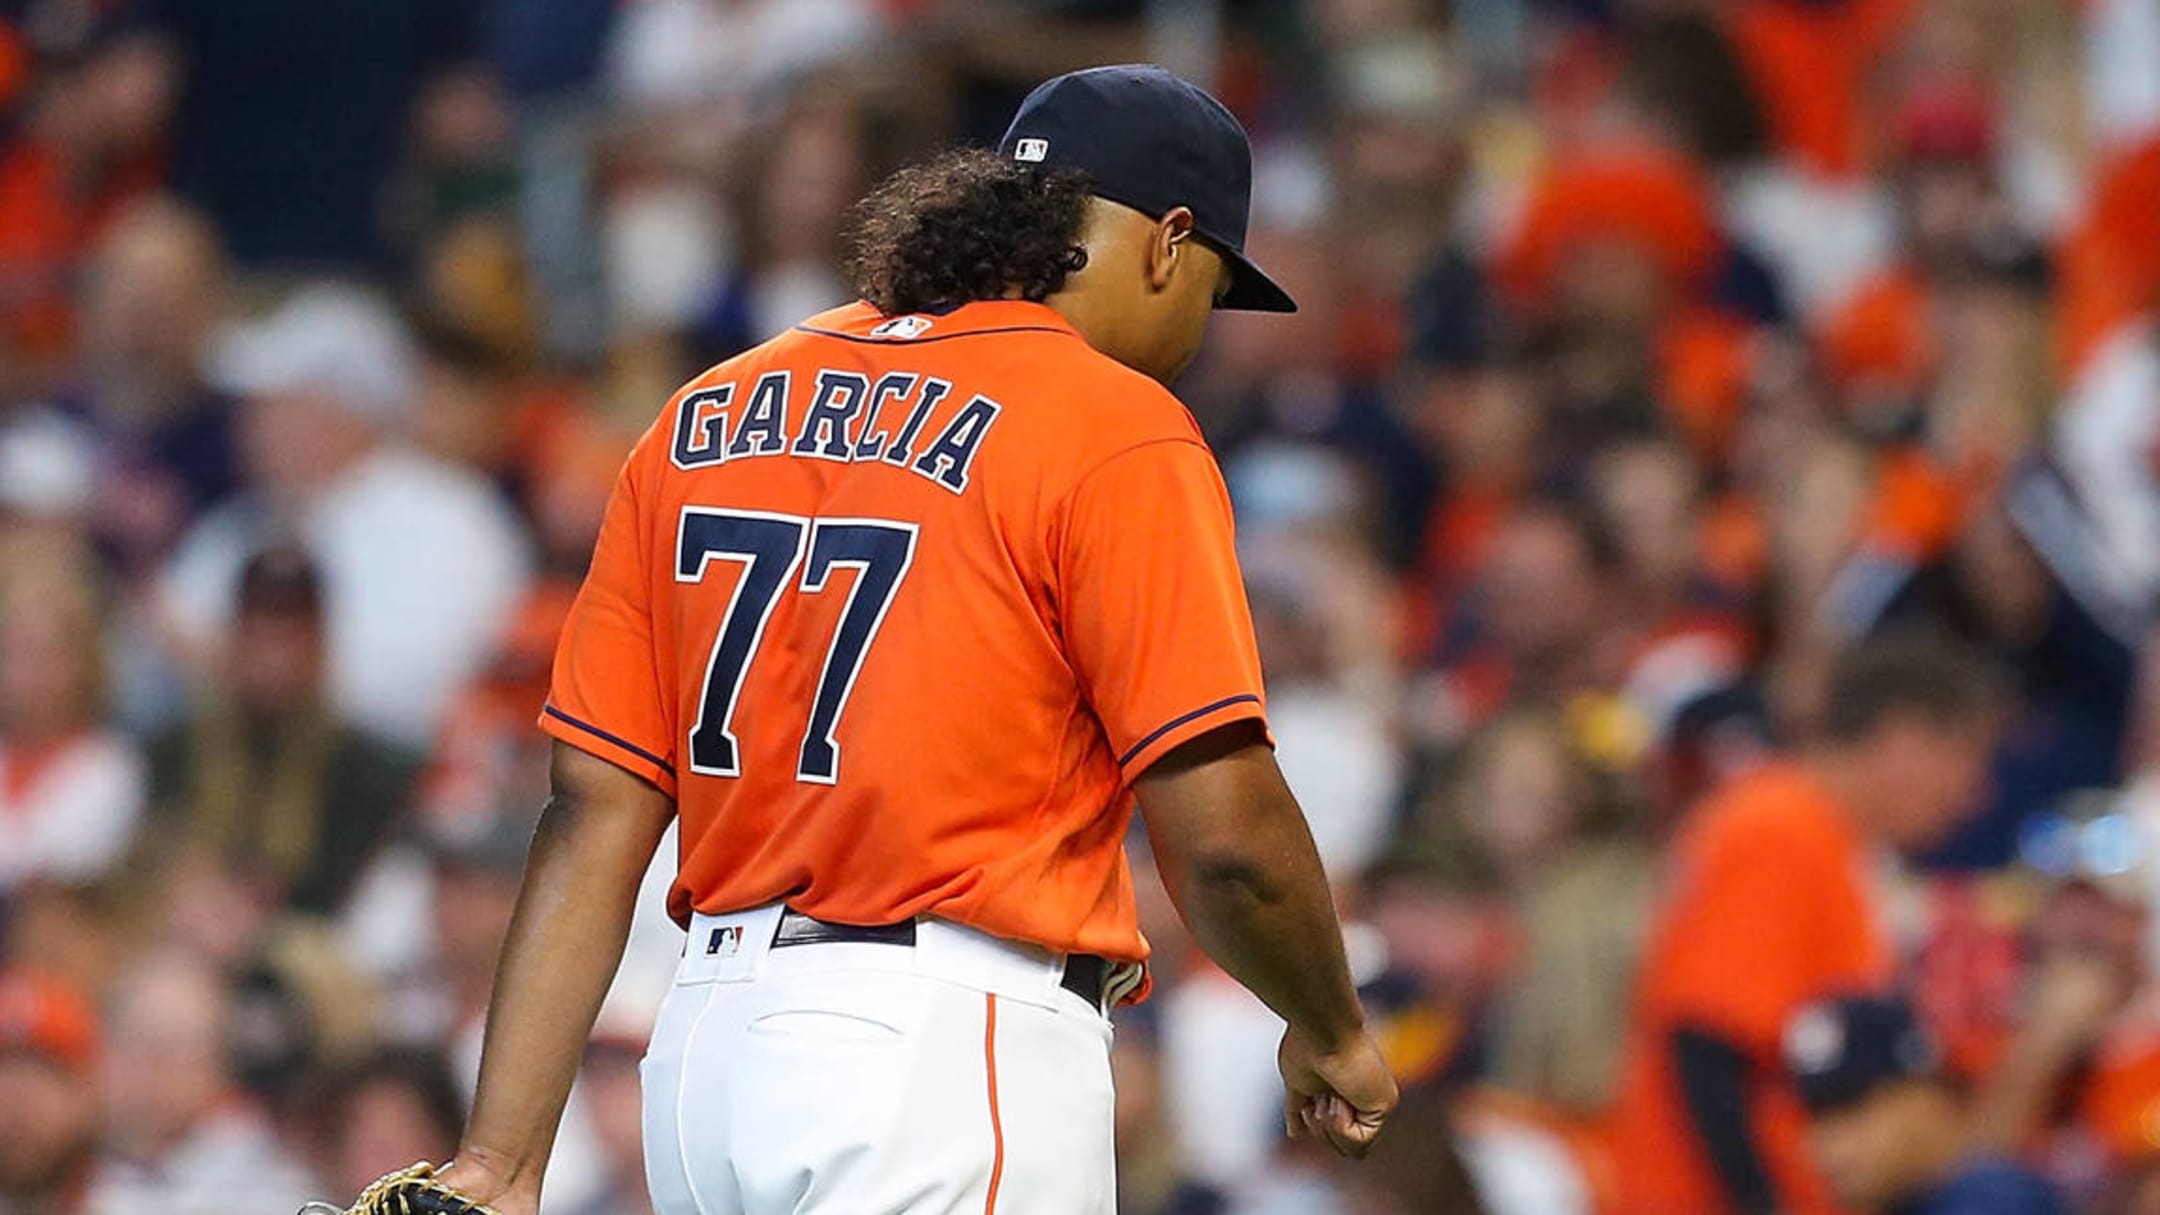 Luis Garcia - MLB News, Rumors, & Updates